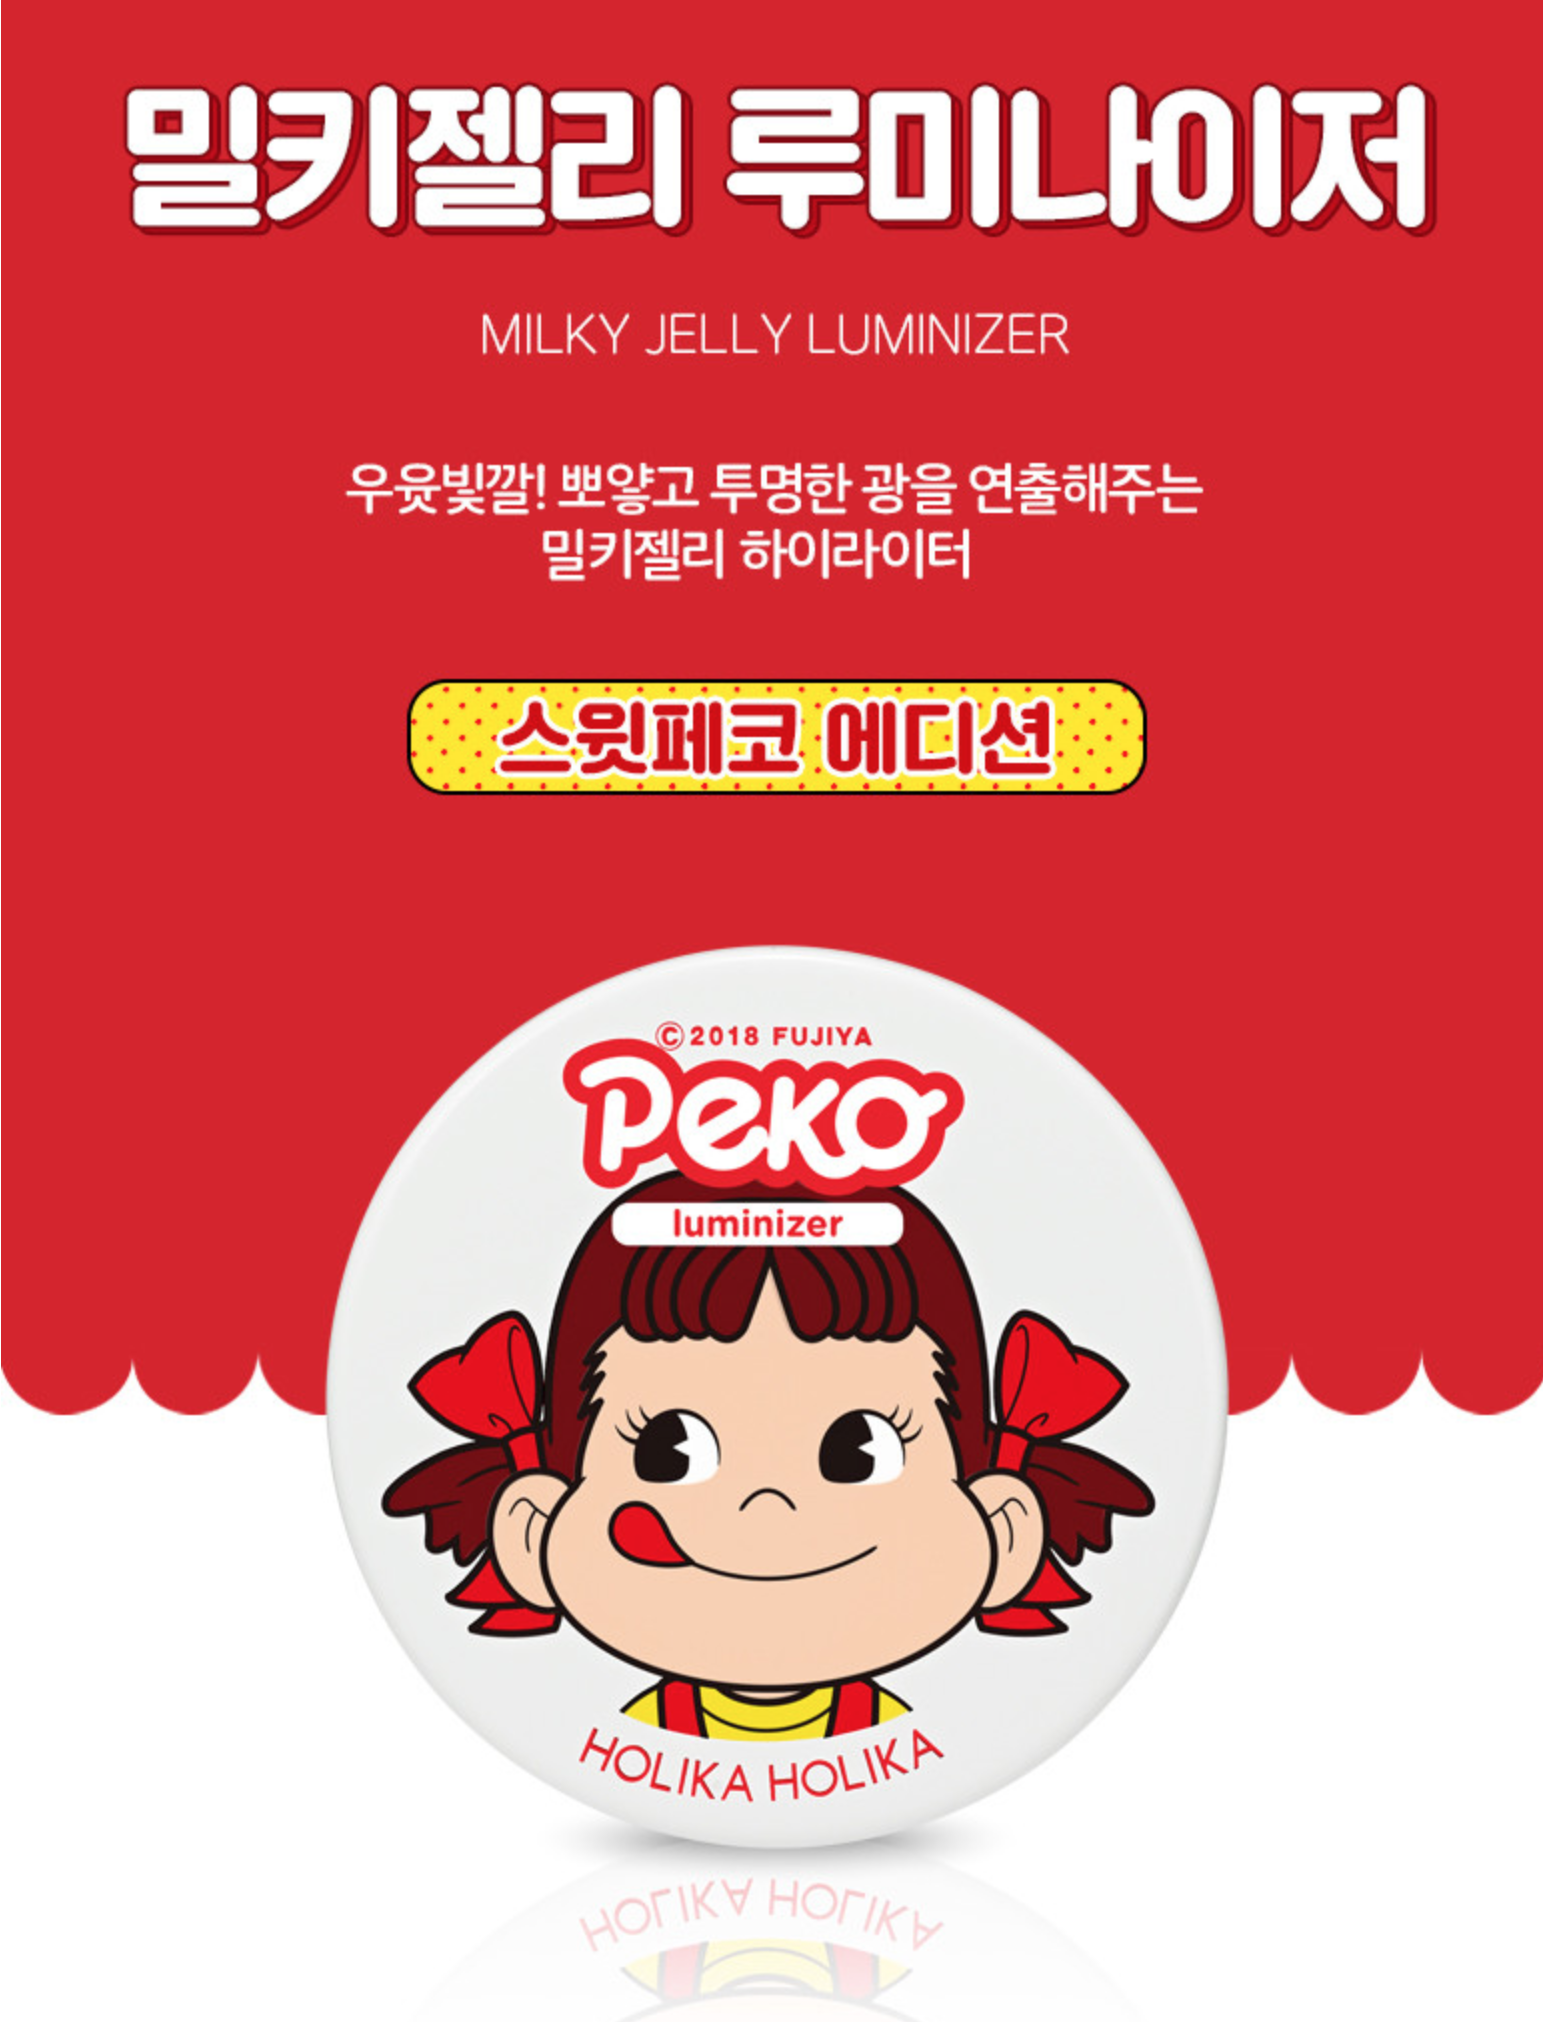 Holika Holika sweet peko multi jelly blusher & milky jelly luminizer  melting milk Review + demo – Christinahello